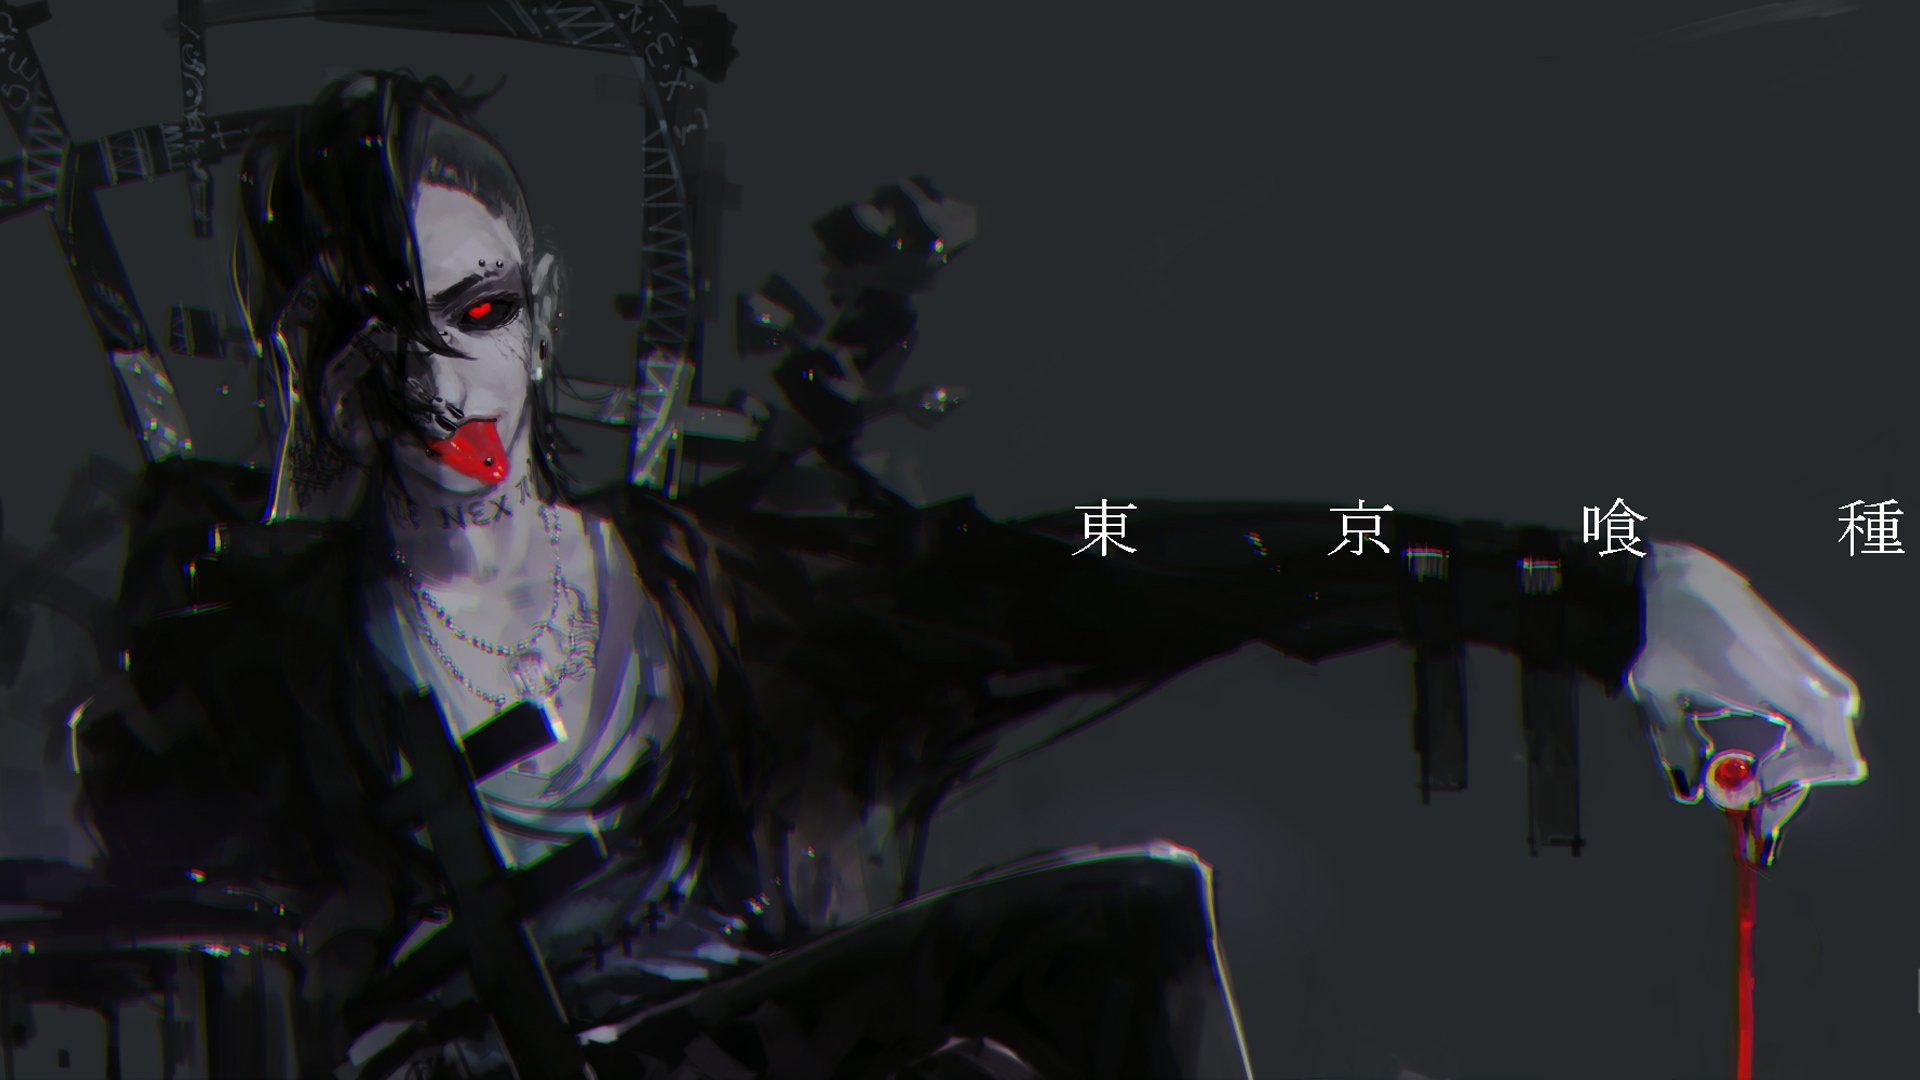 Uta Tokyo Ghoul Wallpaper Top Background